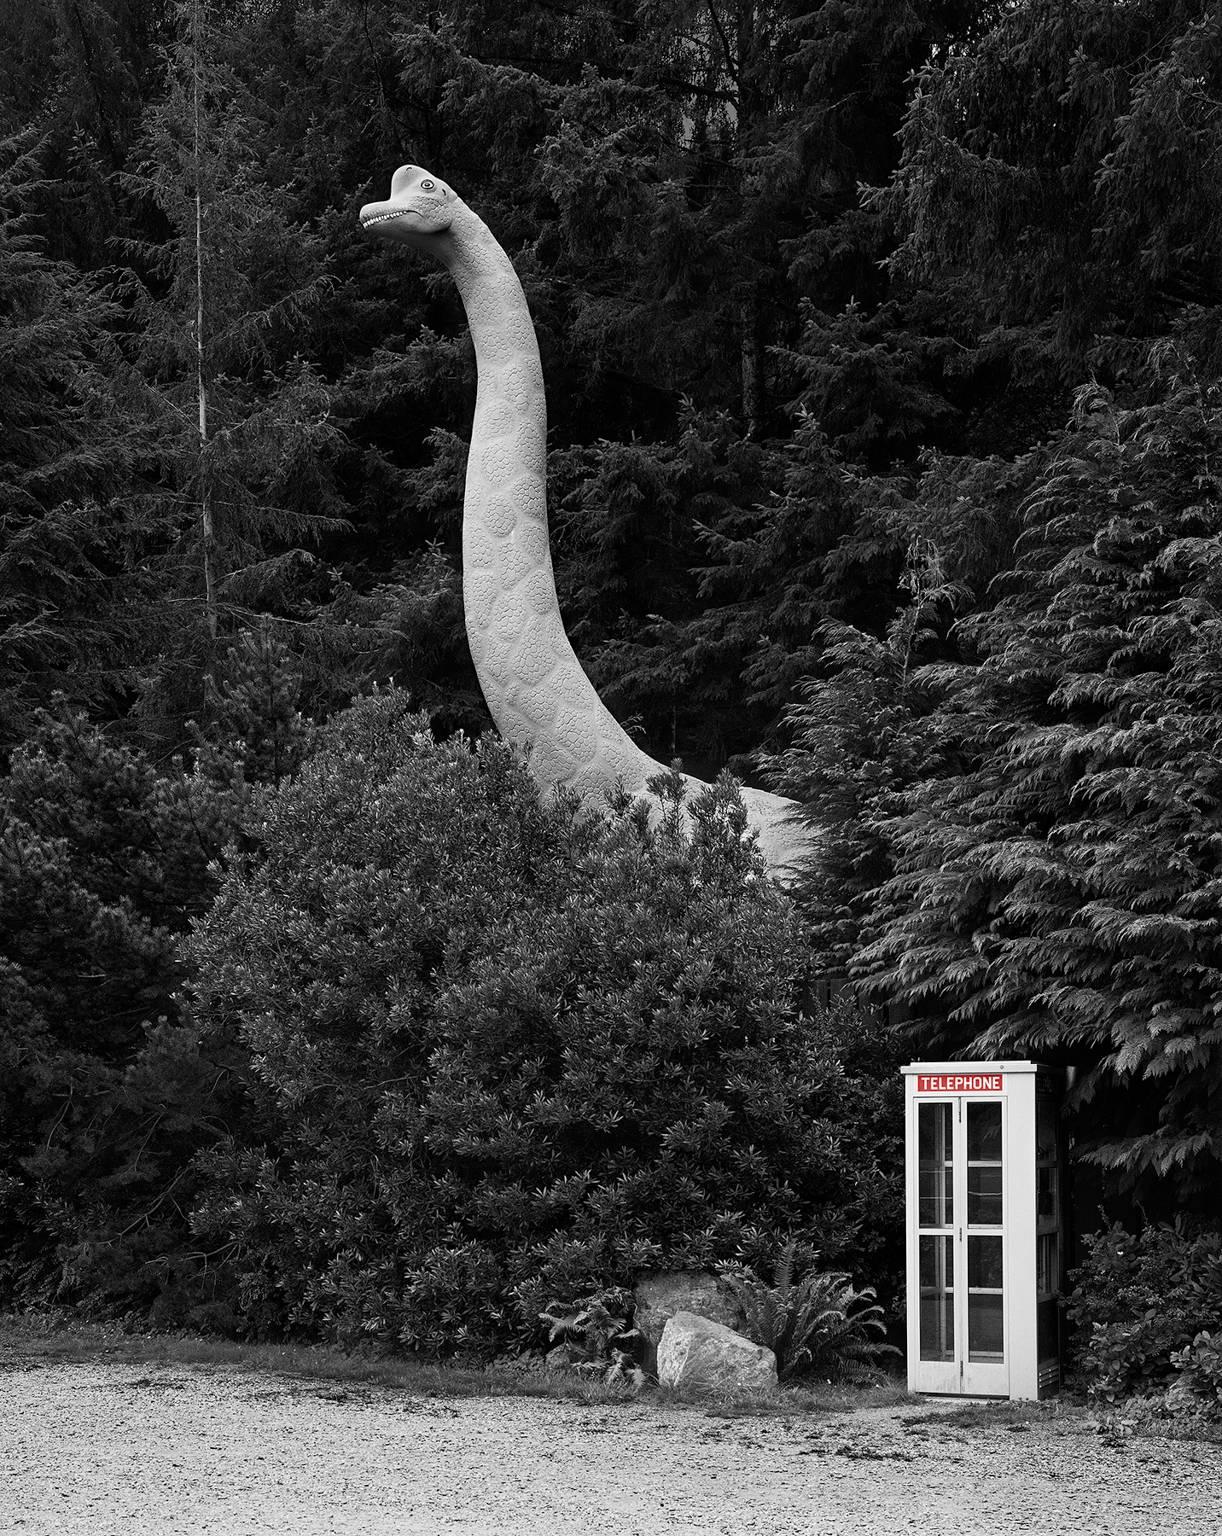 Bob Kolbrener Landscape Photograph - Dinosaur and Telephone Booth, Oregon